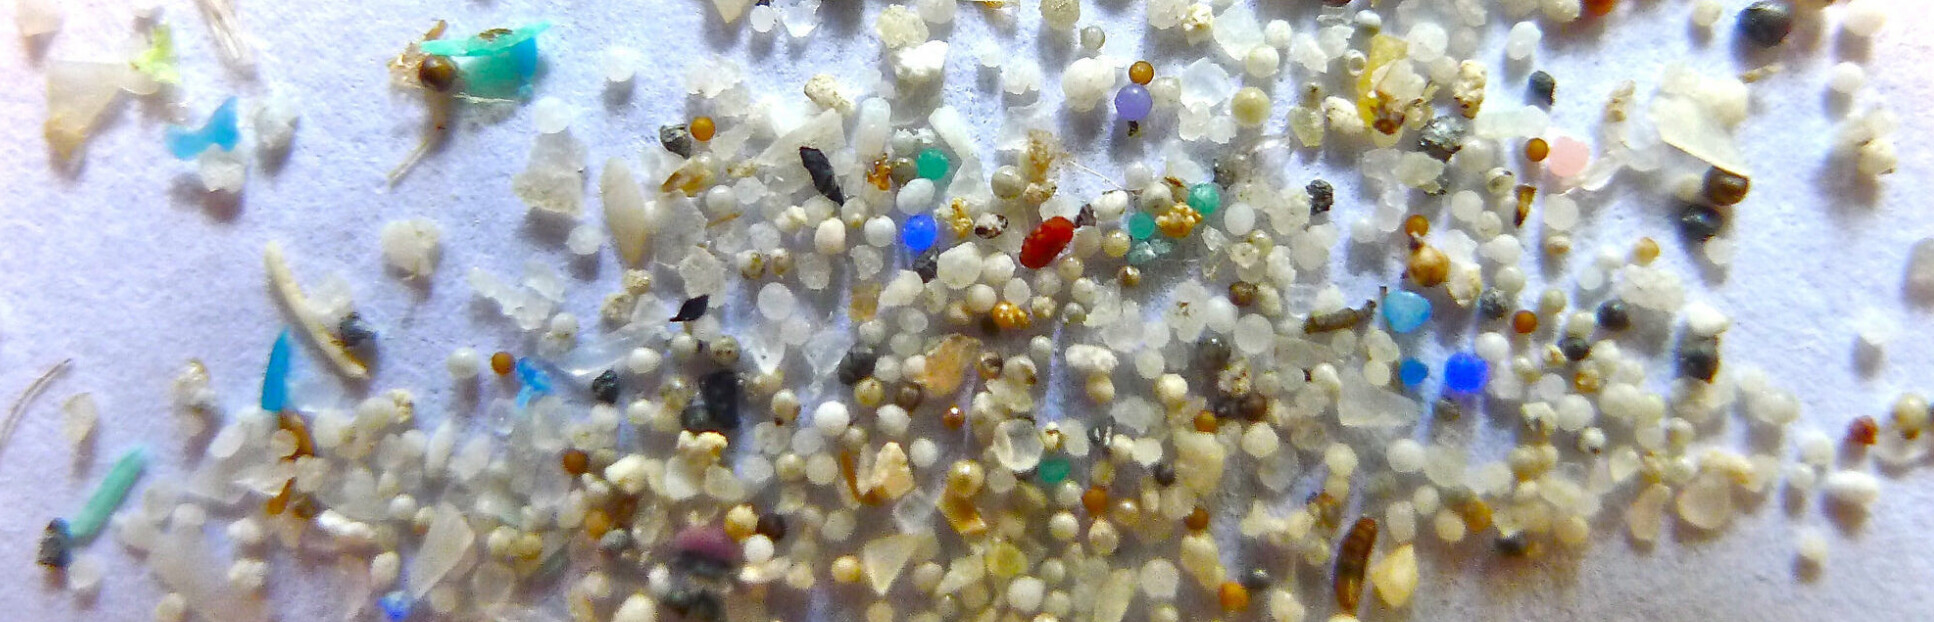 Microplastics. Image credit: Oregon State University Flickr